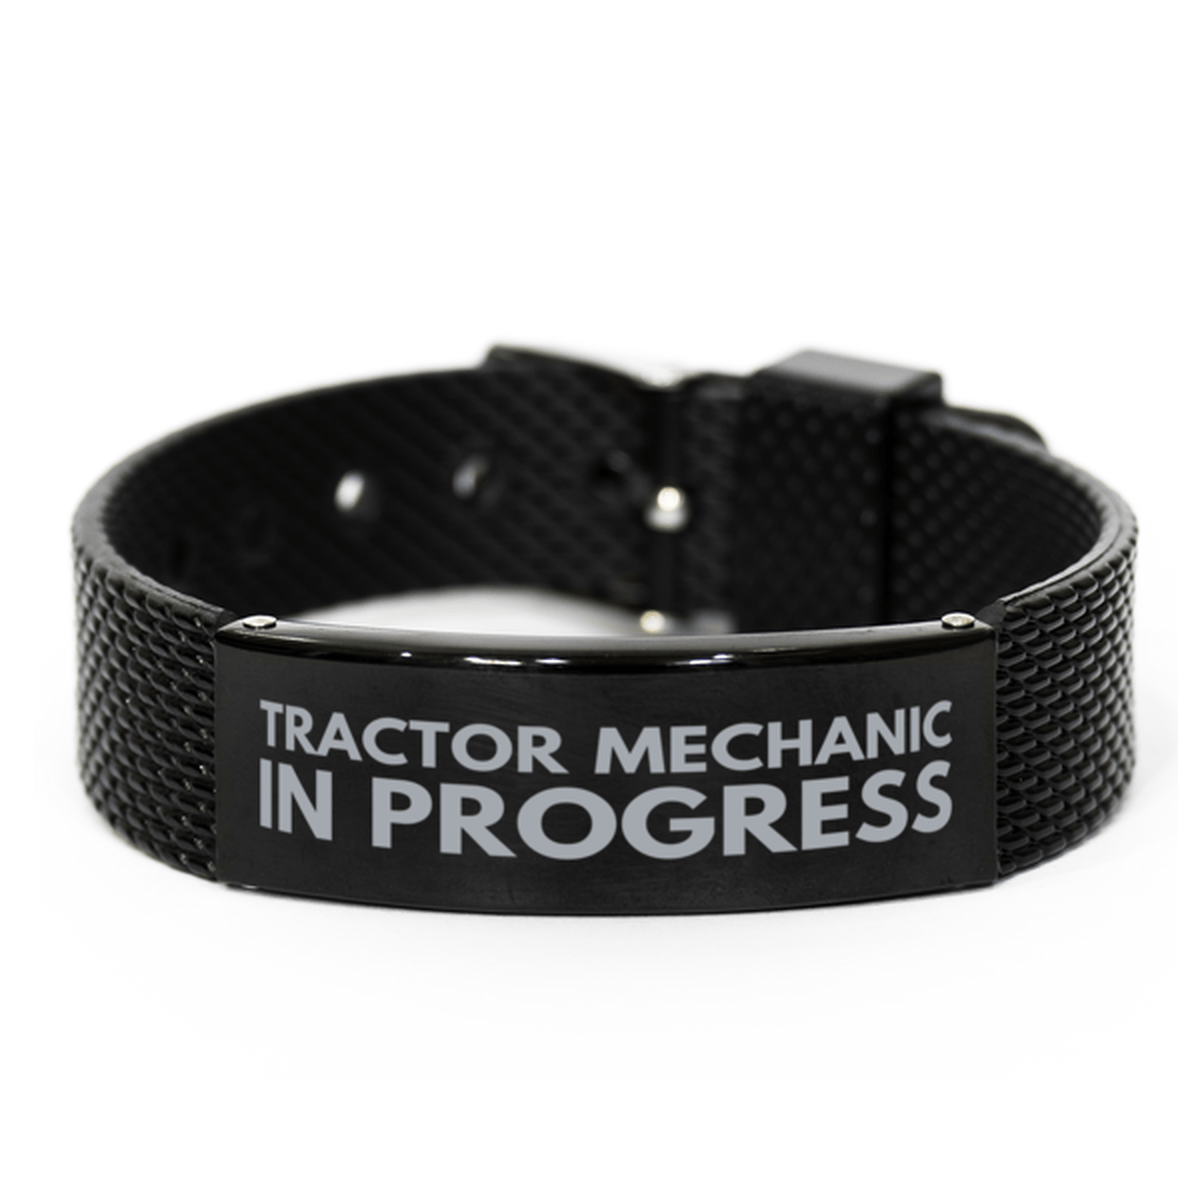 Inspirational Tractor Mechanic Black Shark Mesh Bracelet, Tractor Mechanic In Progress, Best Graduation Gifts for Students